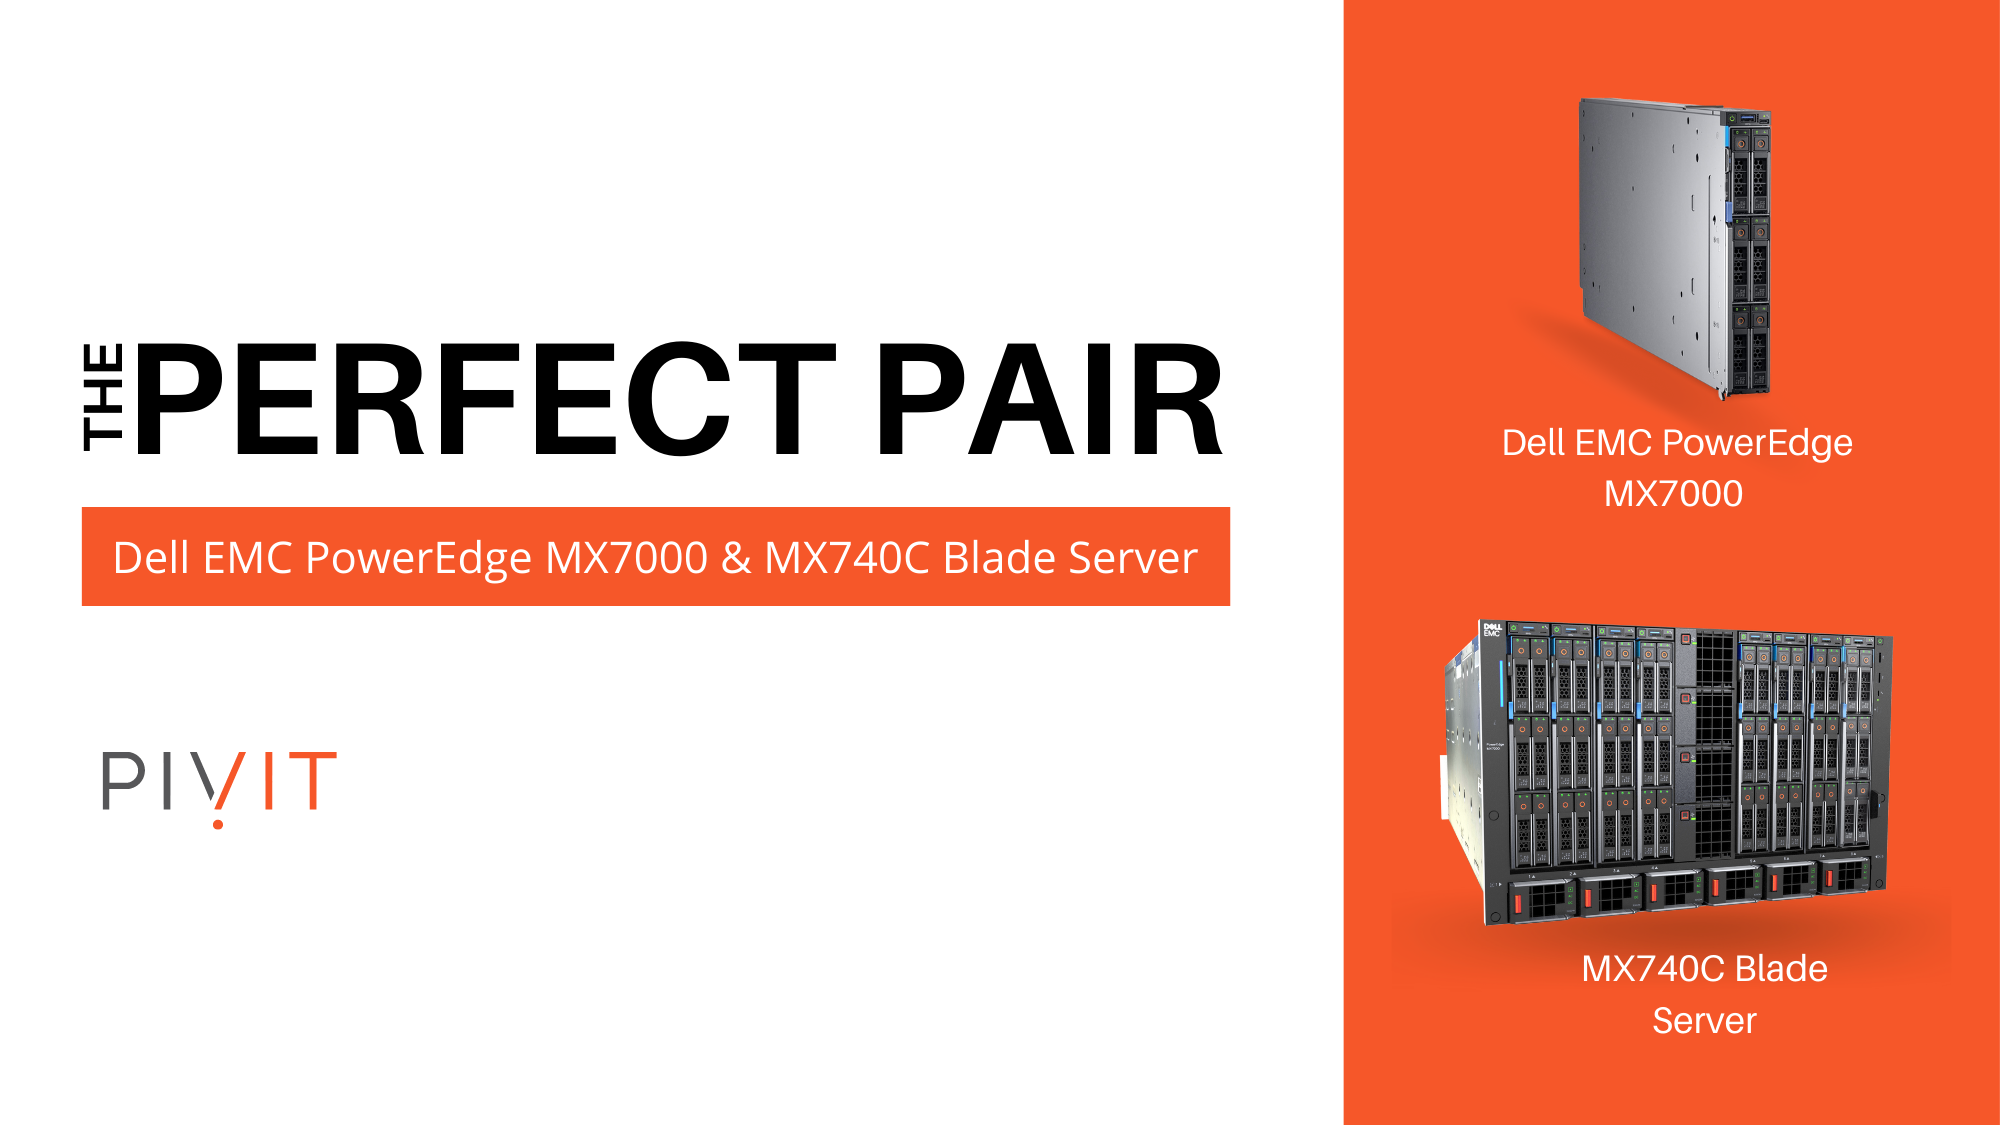 The Perfect Pair: Dell EMC PowerEdge MX7000 & the MX740C Blade Server